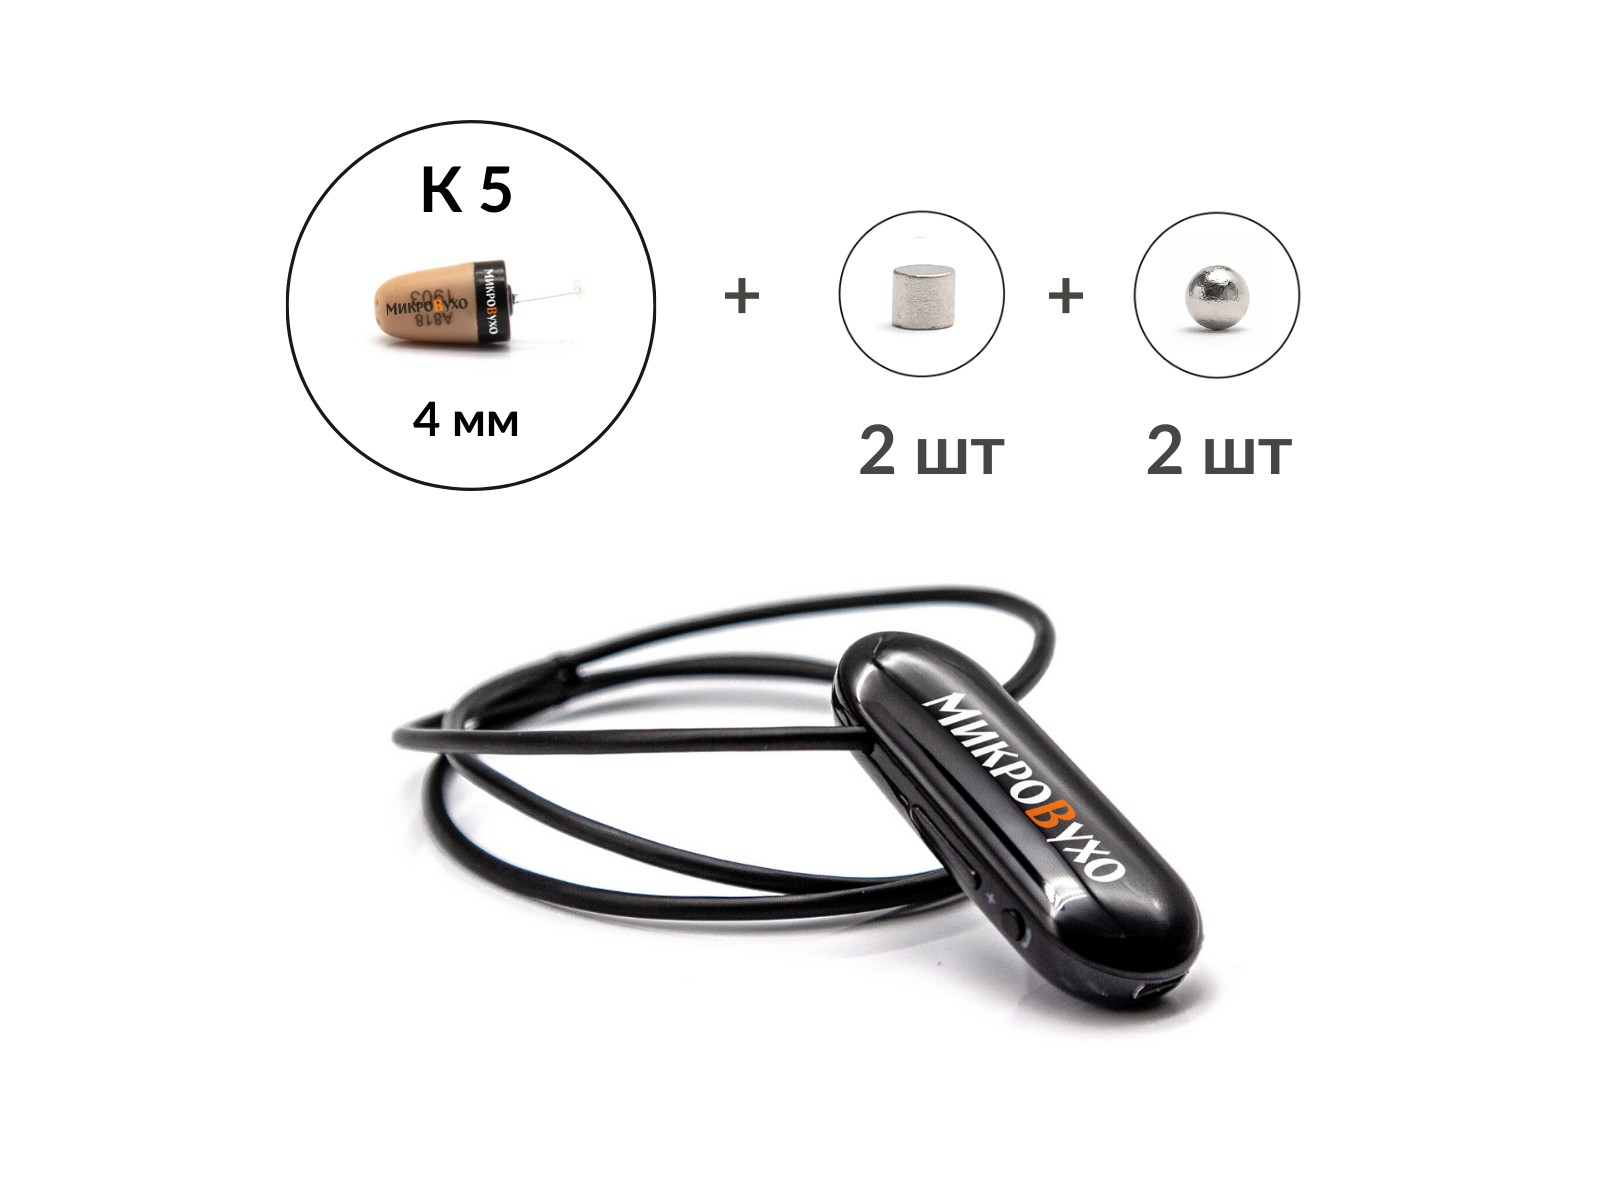 Аренда микронаушника Bluetooth Pro с капсулой К5 4 мм и магнитами 2 мм 1